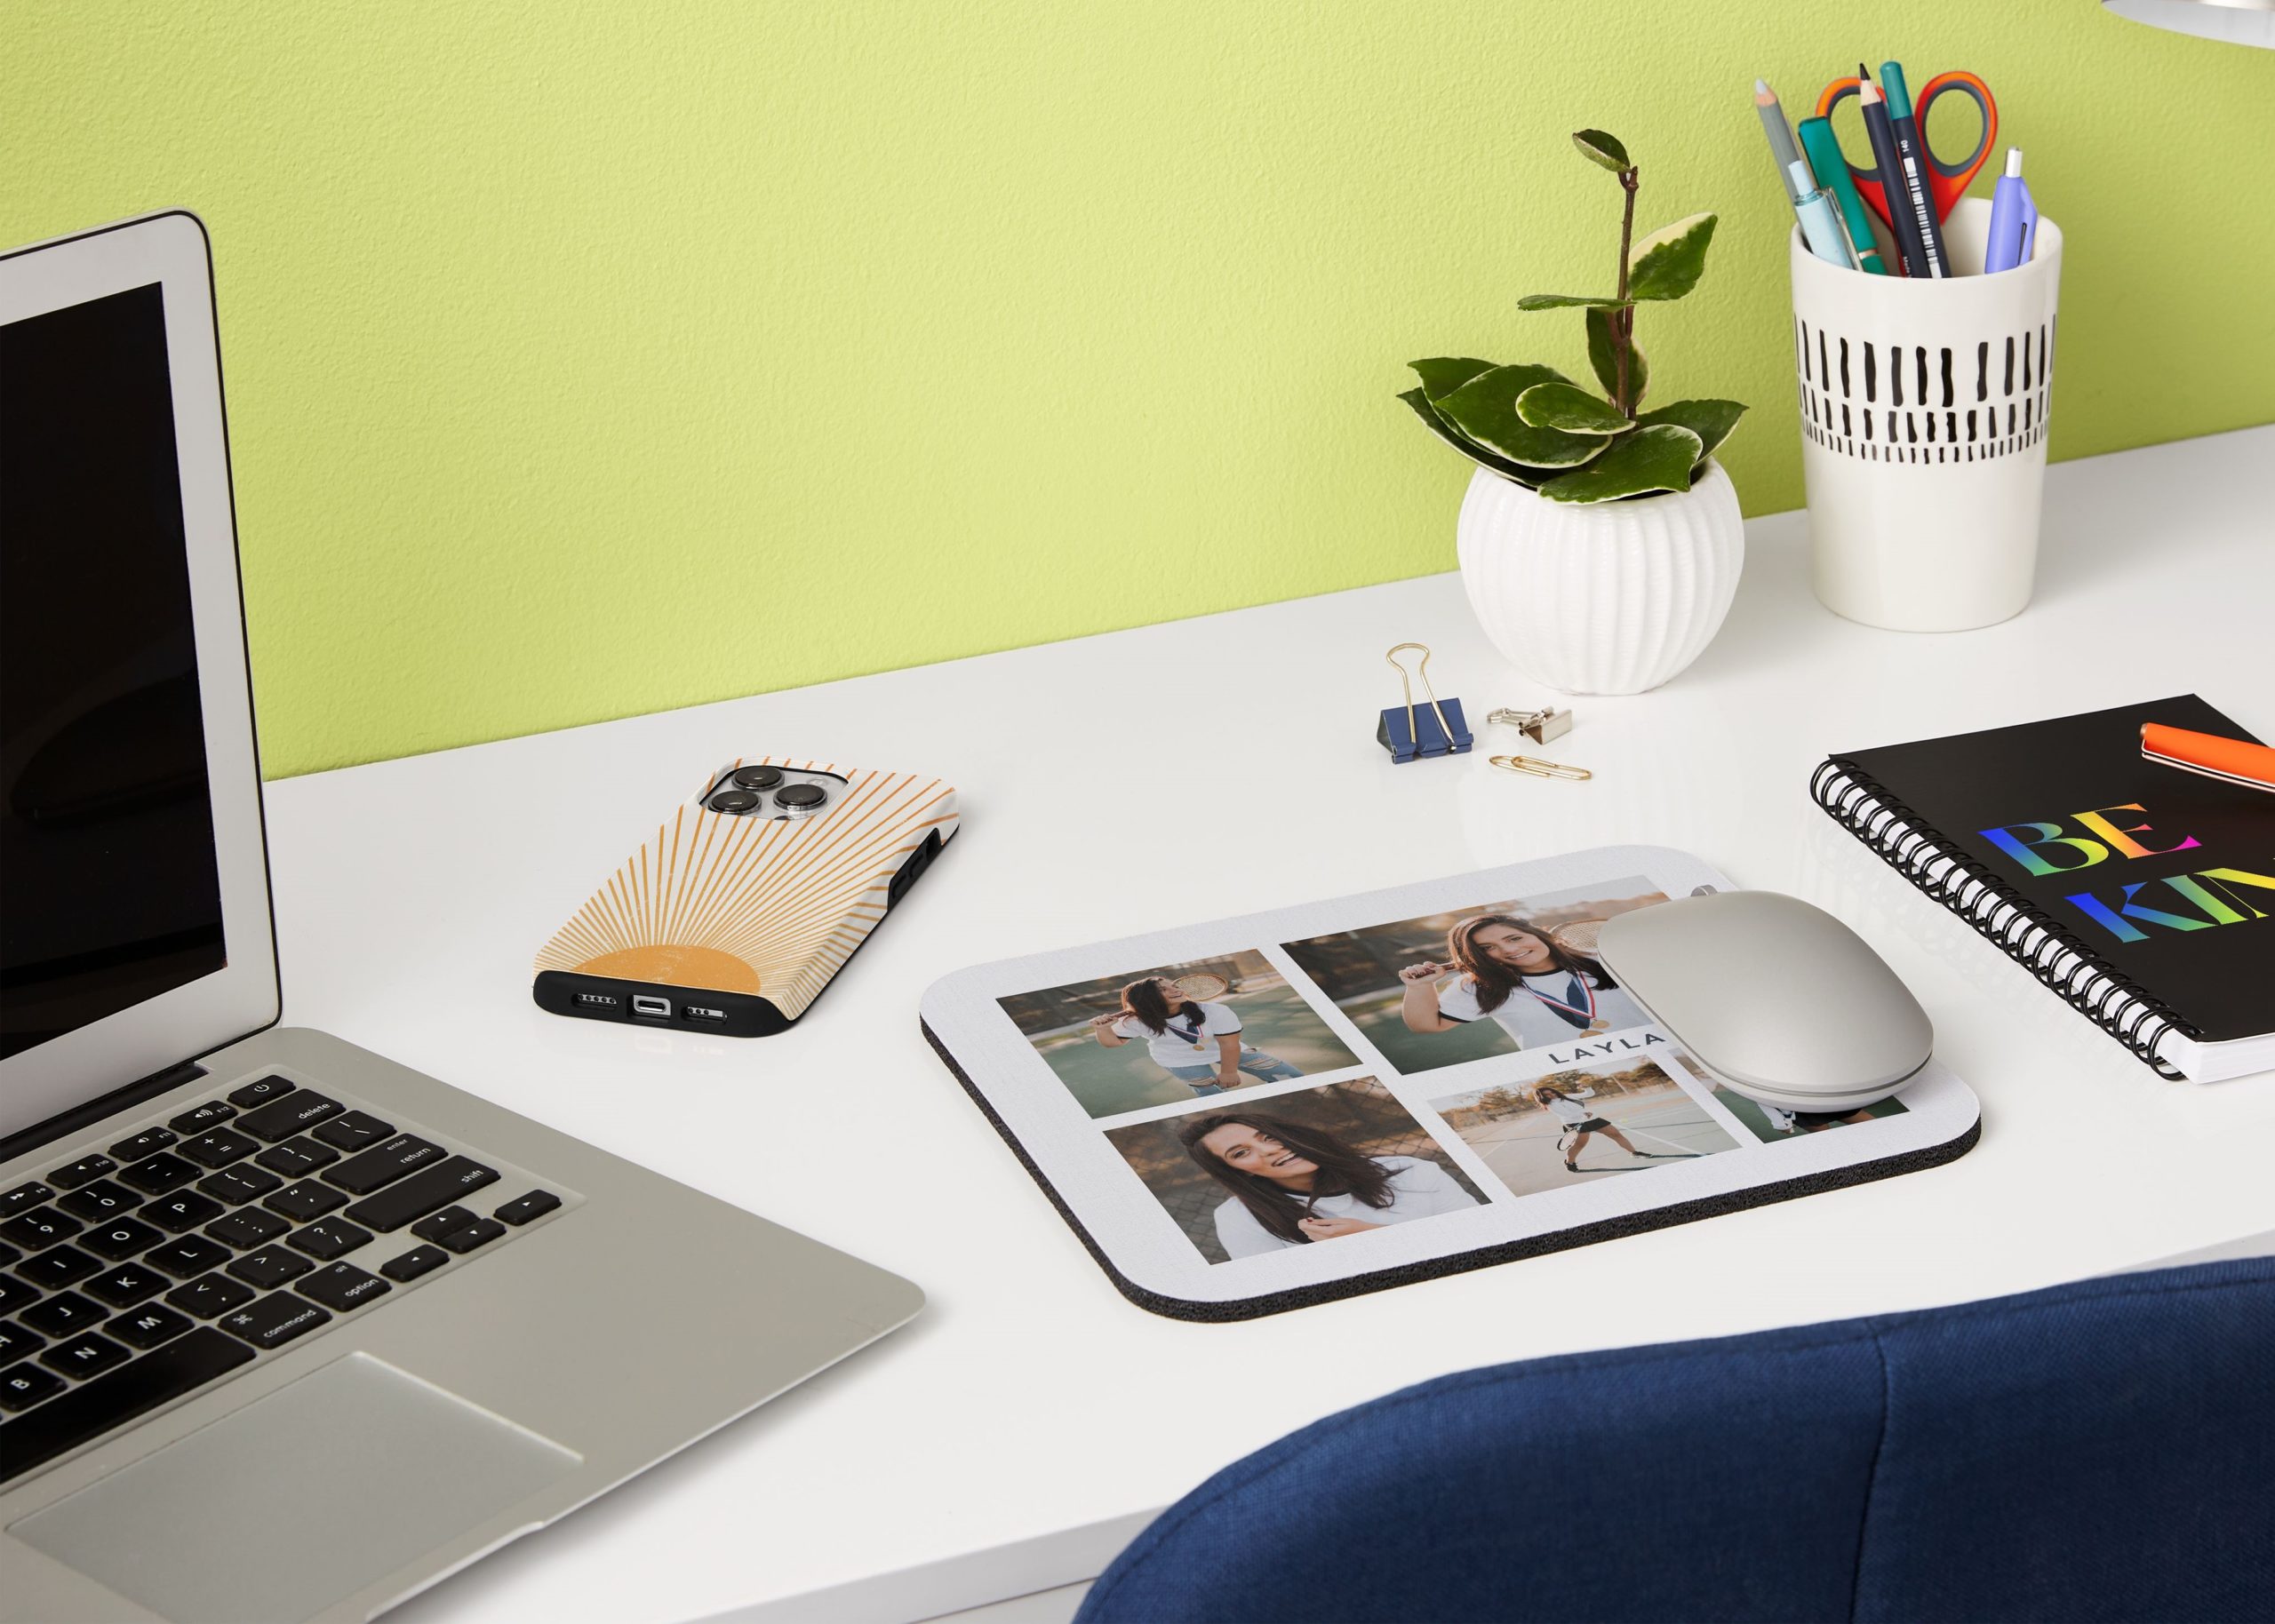 custom mouse pad with photos